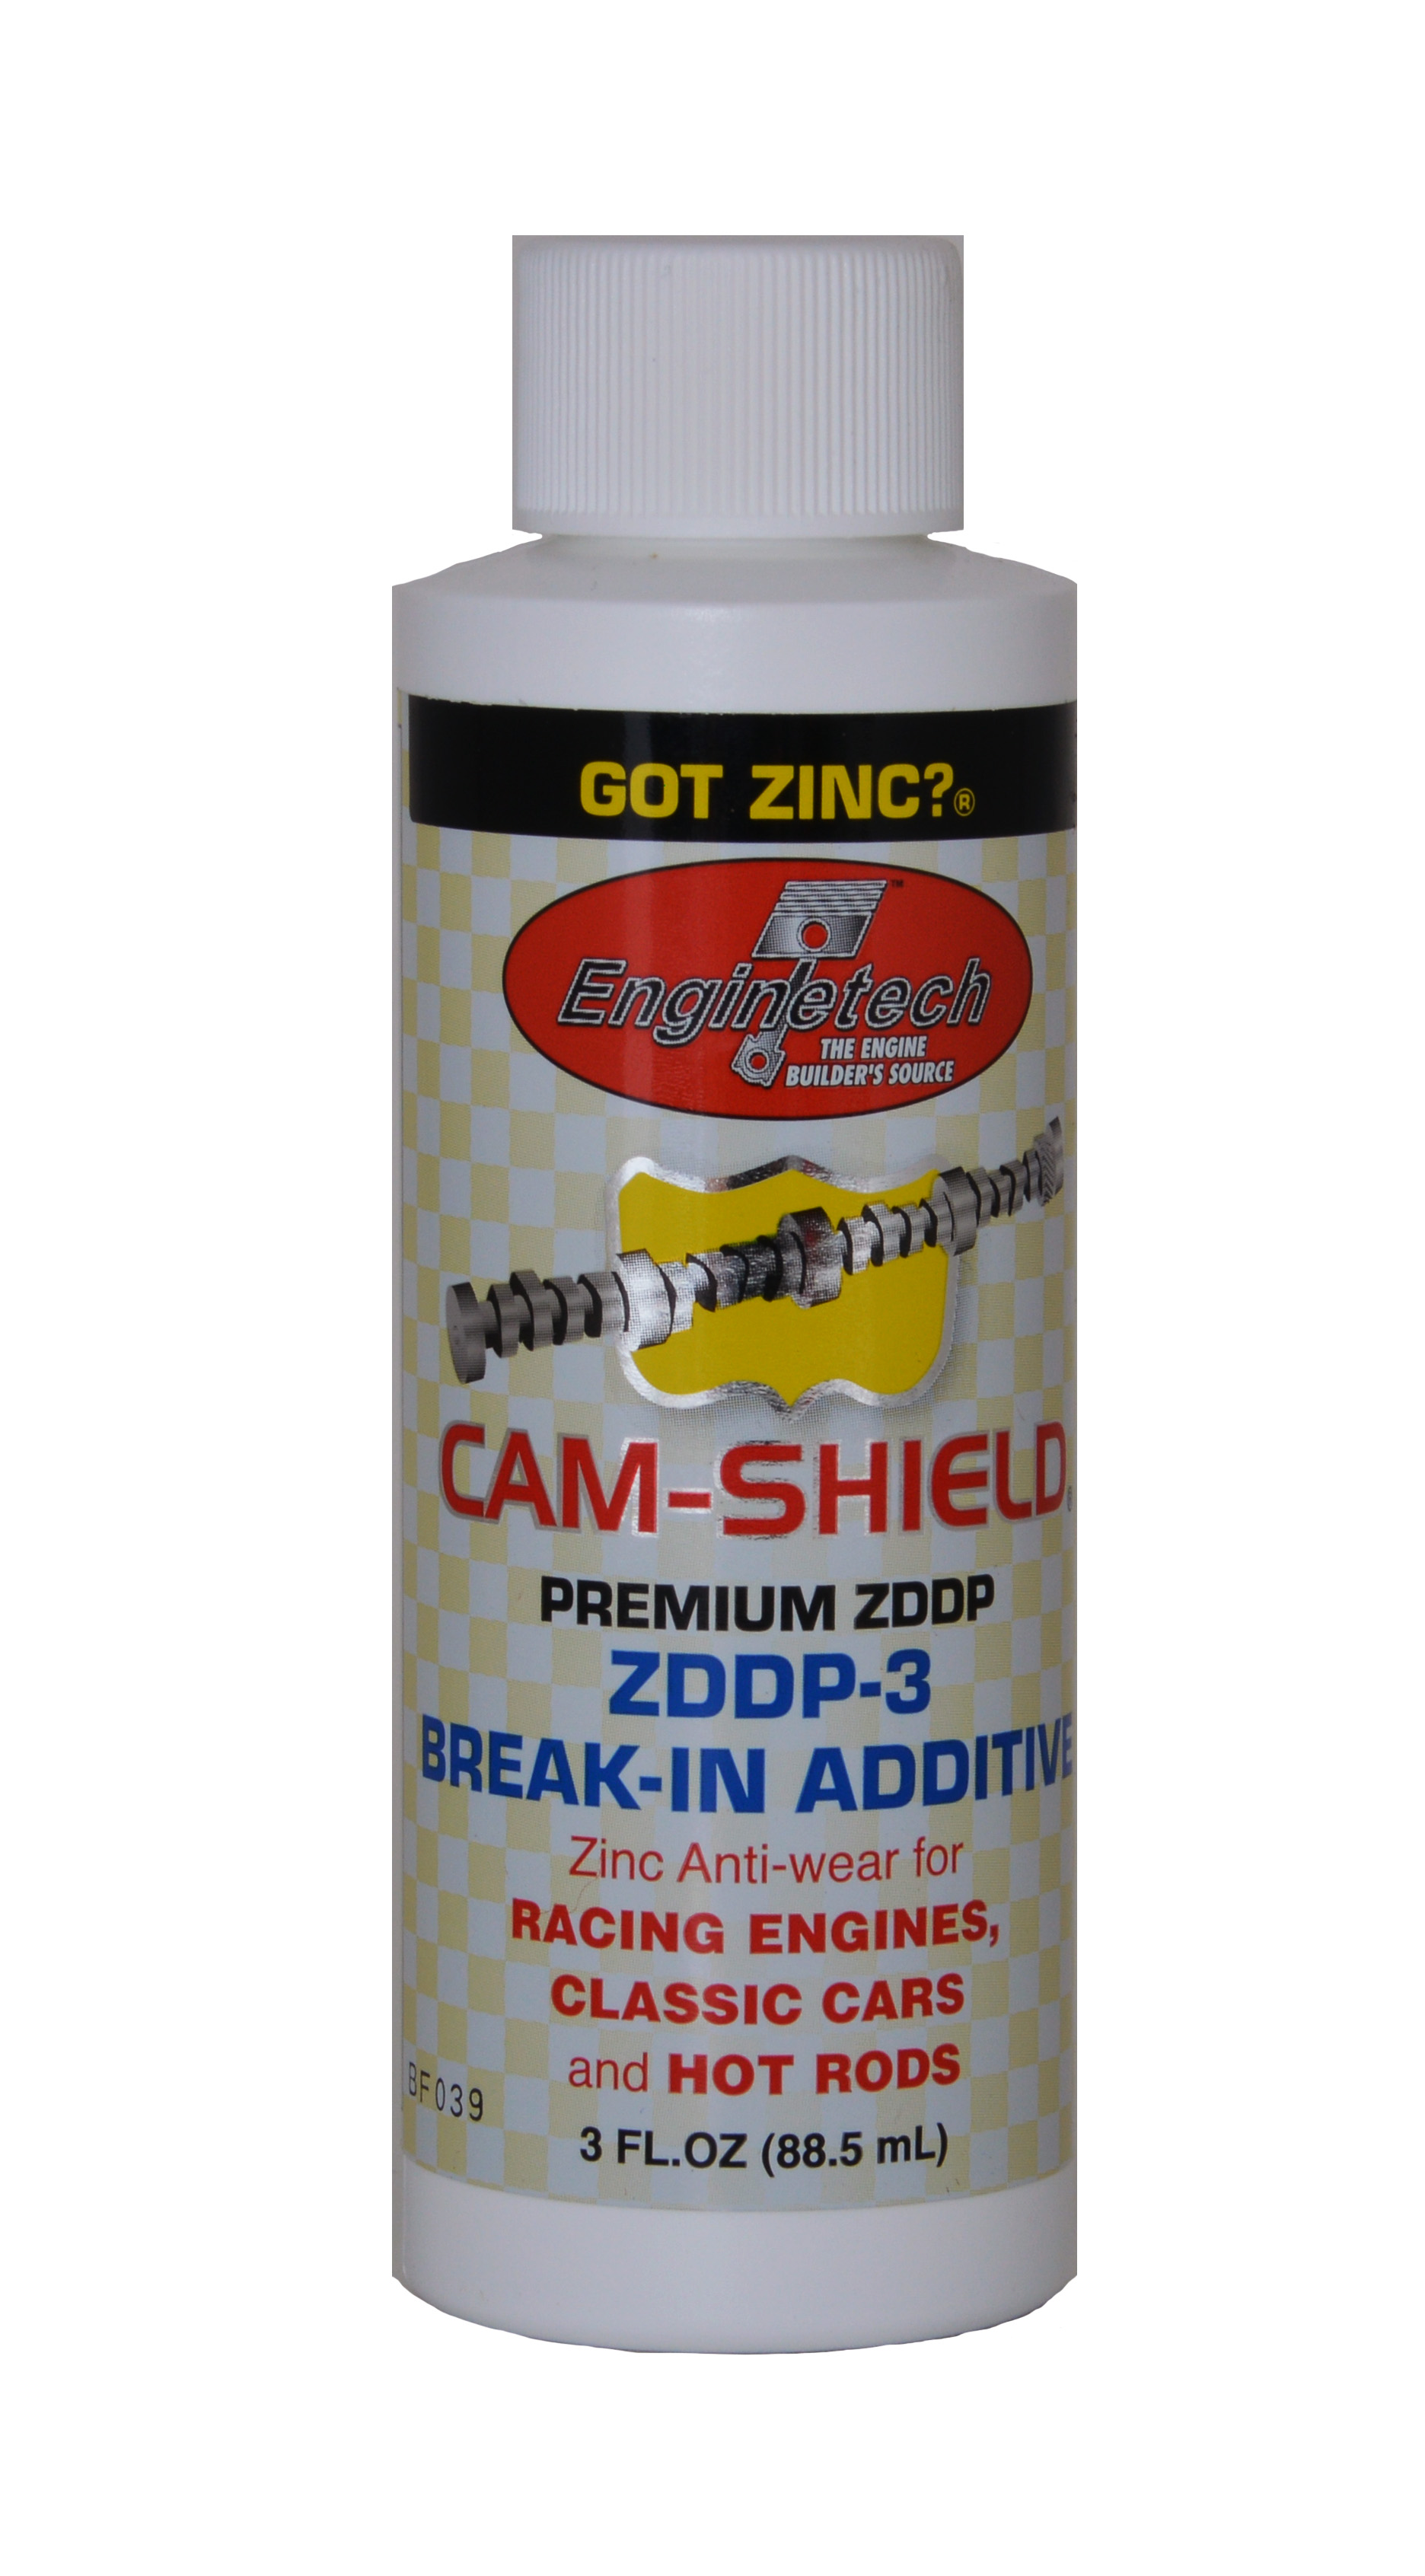 ZDDP-3 Camshaft - Stock Enginetech